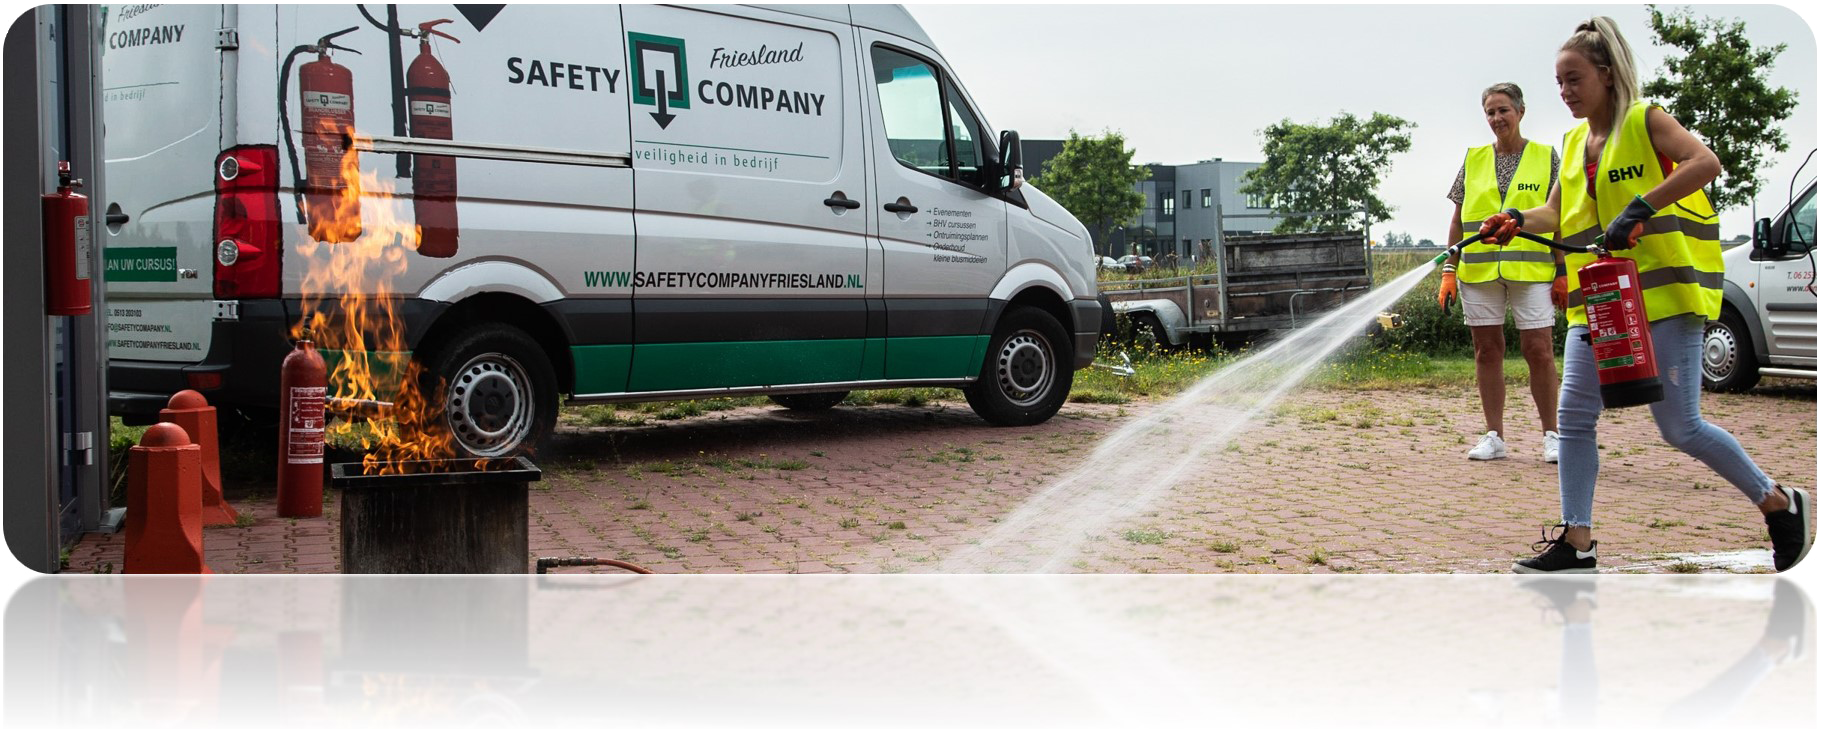 Safety Company Friesland - Veiligheid in bedrijf